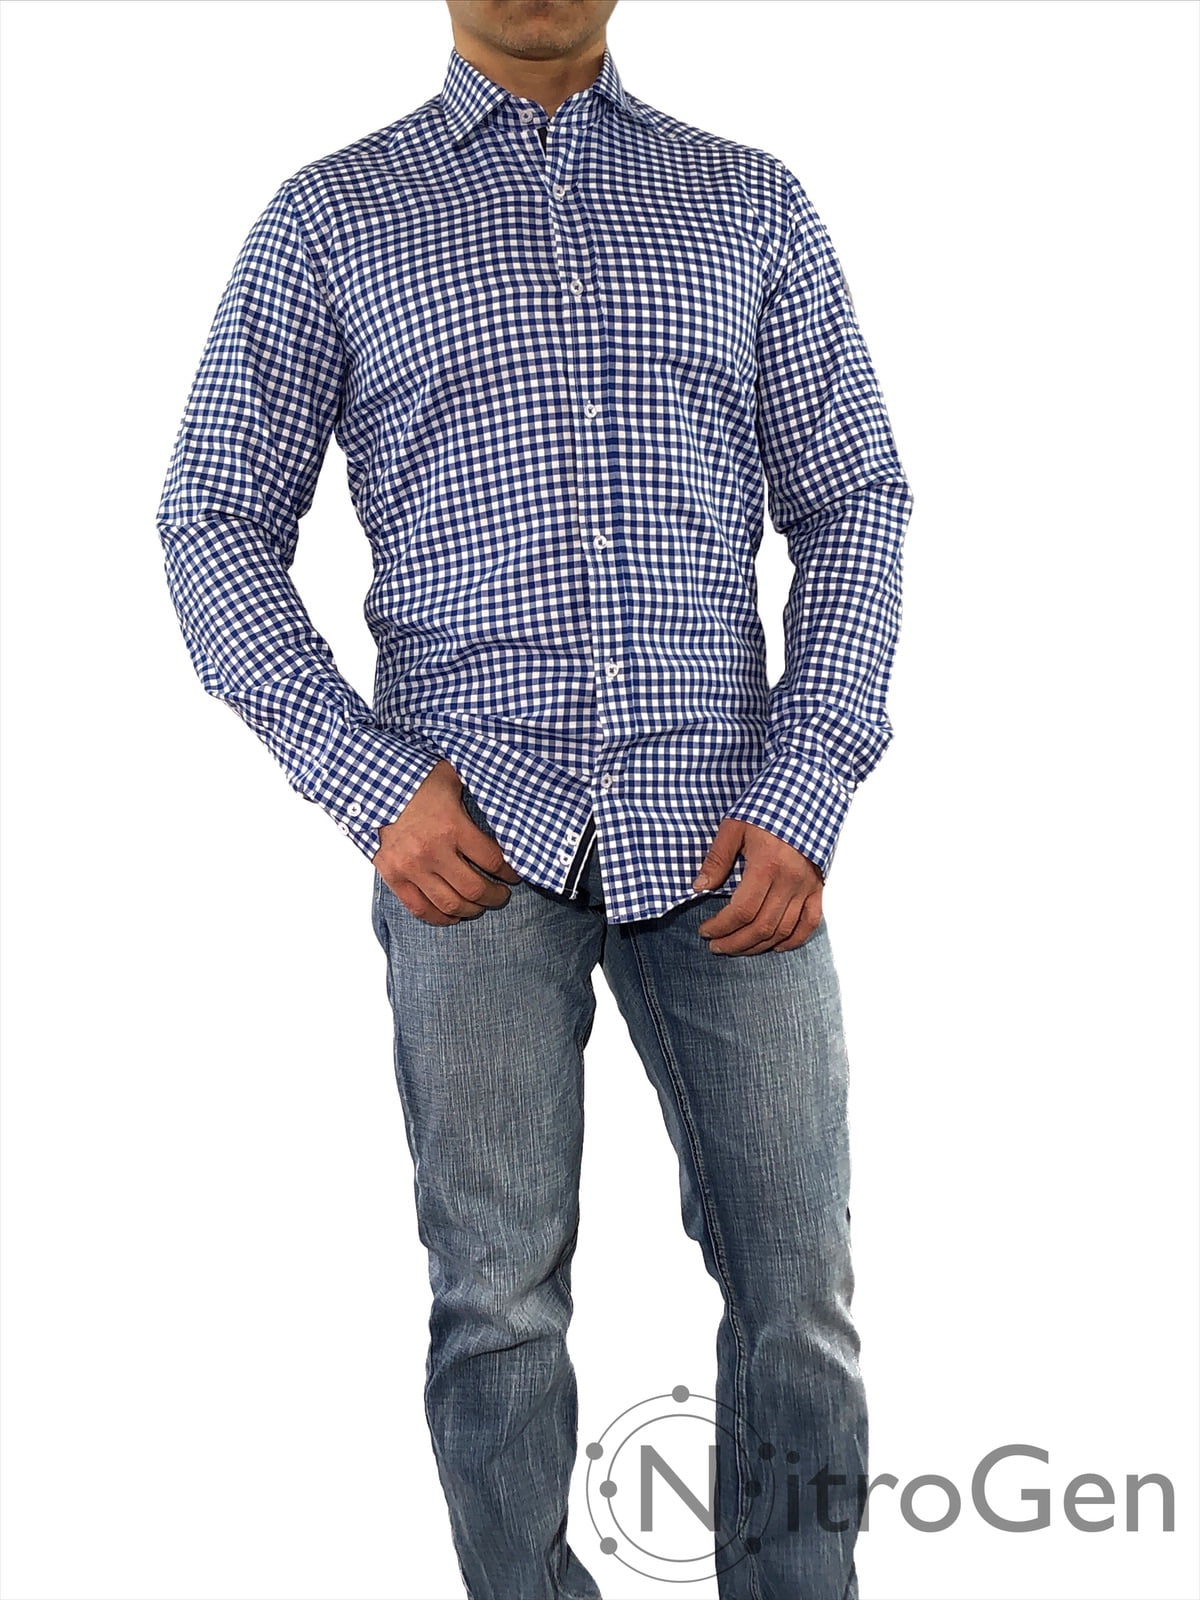 Men's Long Sleeve Dress Shirt Slim Fit - Super Soft Egyptian Cotton -  Checkered (SMALL, MD CHECK BLUE/WHITE) - Walmart.com